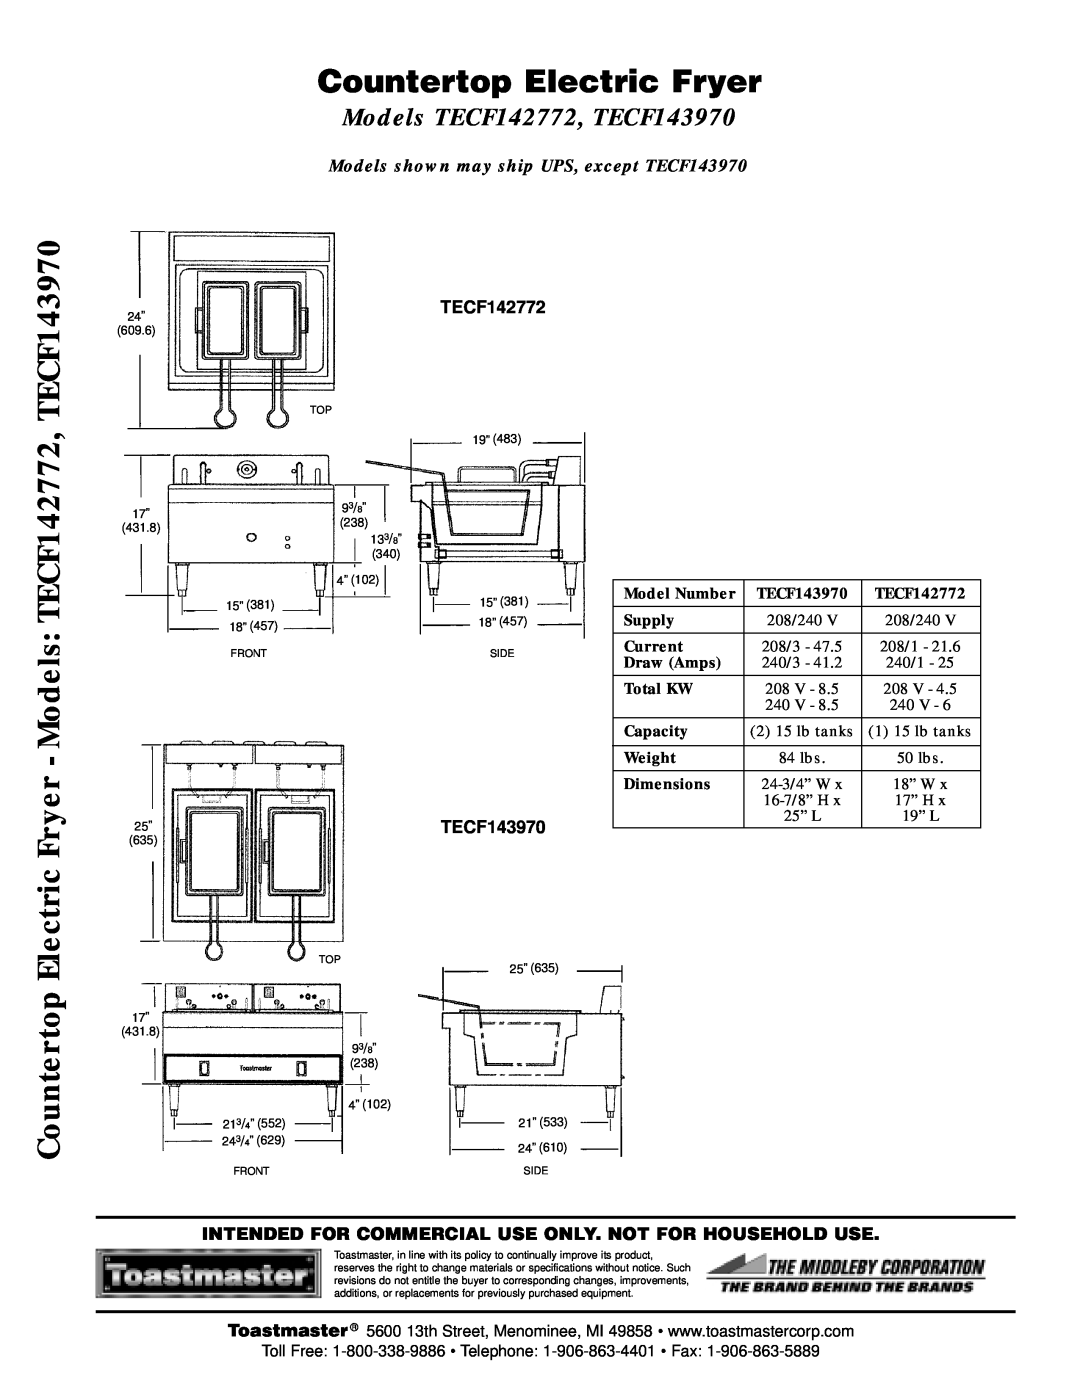 Toastmaster Countertop Electric Fryer, Models TECF142772, TECF143970, Models shown may ship UPS, except TECF143970 